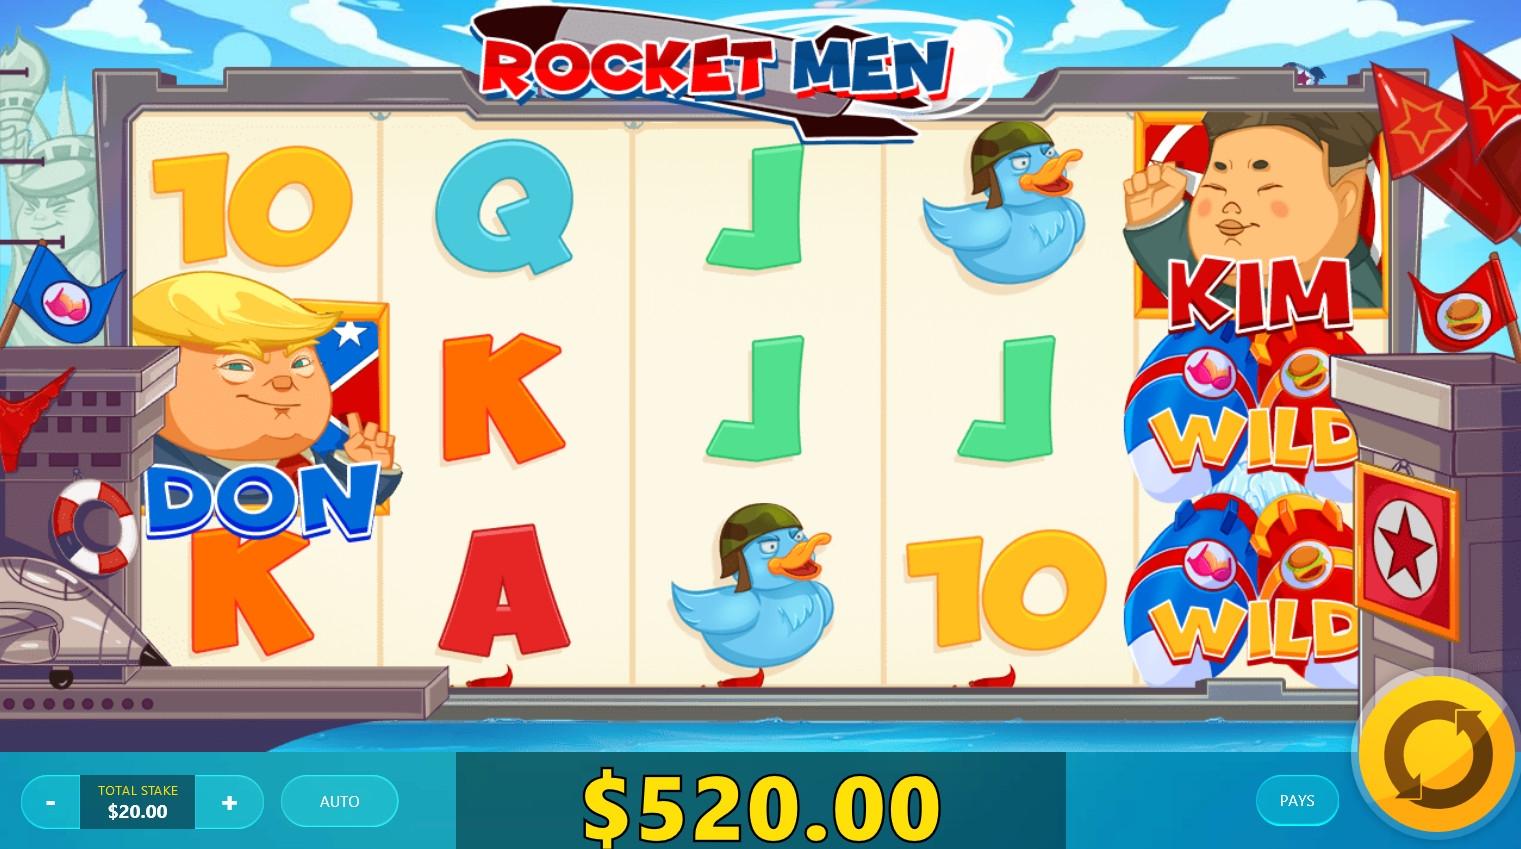 Rocket Men (Rocket Men) from category Slots